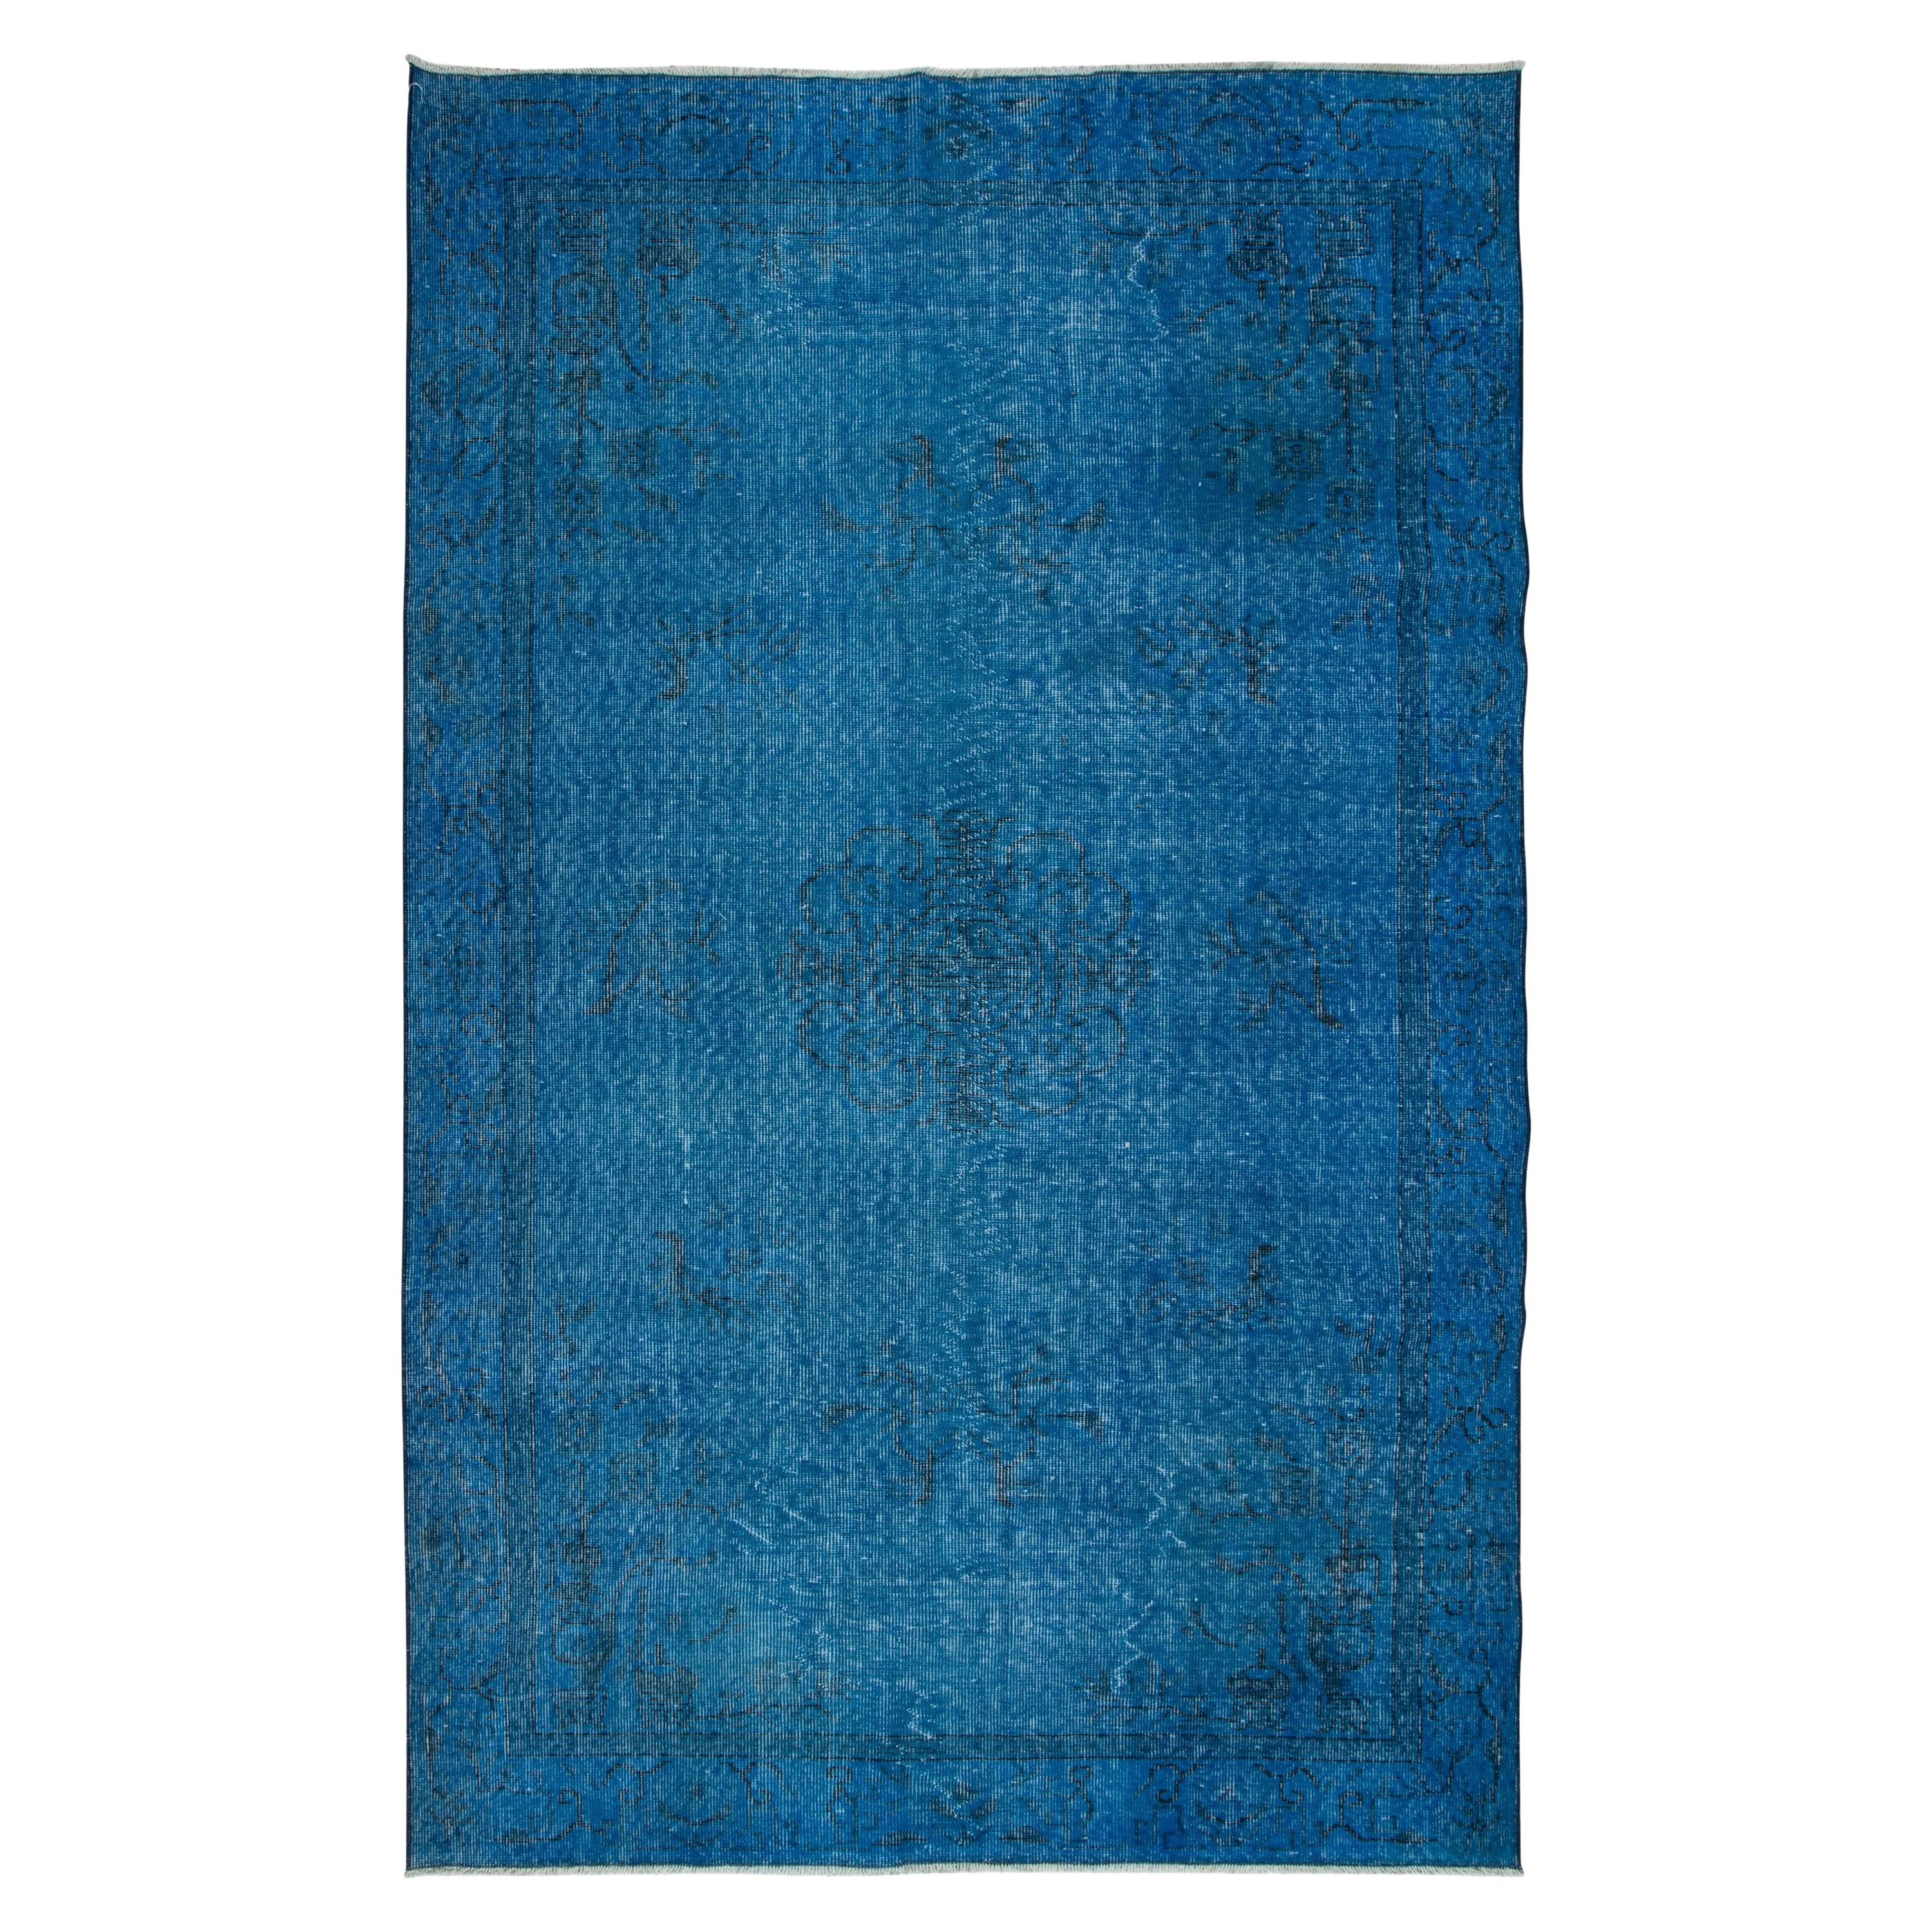 5.5x8.8 Ft Chinese Art Deco Inspired Handmade Blue Rug for Modern Interiors For Sale